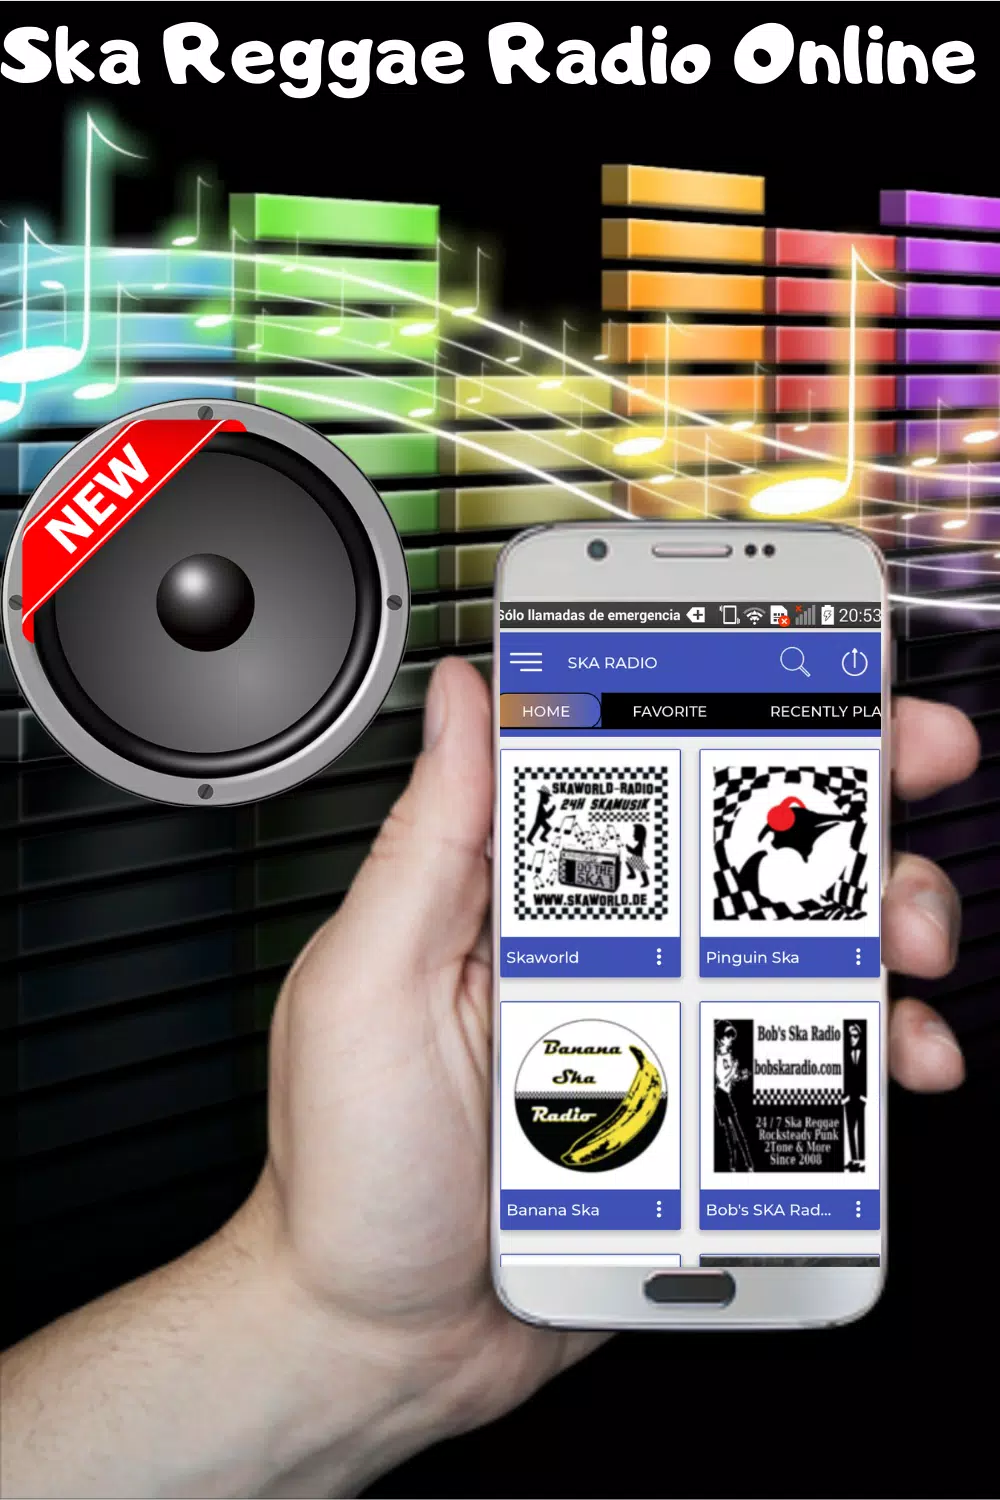 Ska Reggae Radio for Android - APK Download